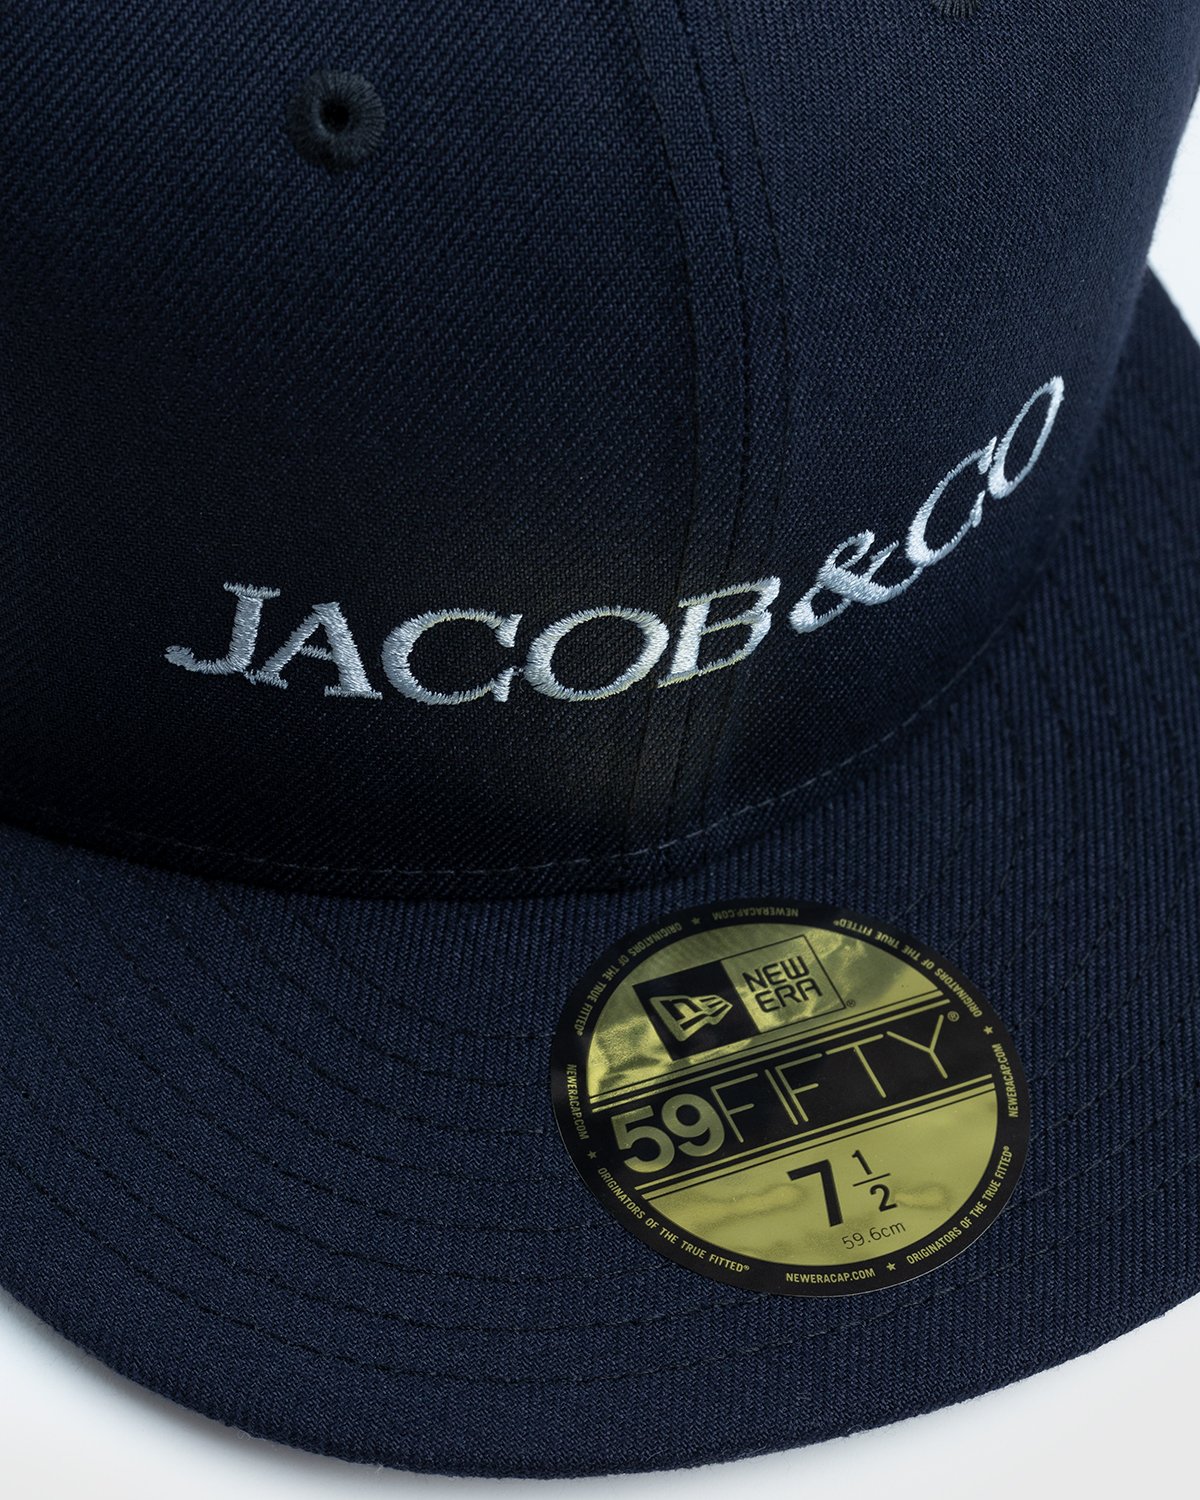 Jacob & Co. x Highsnobiety - Logo Cap Navy - Accessories - Blue - Image 7